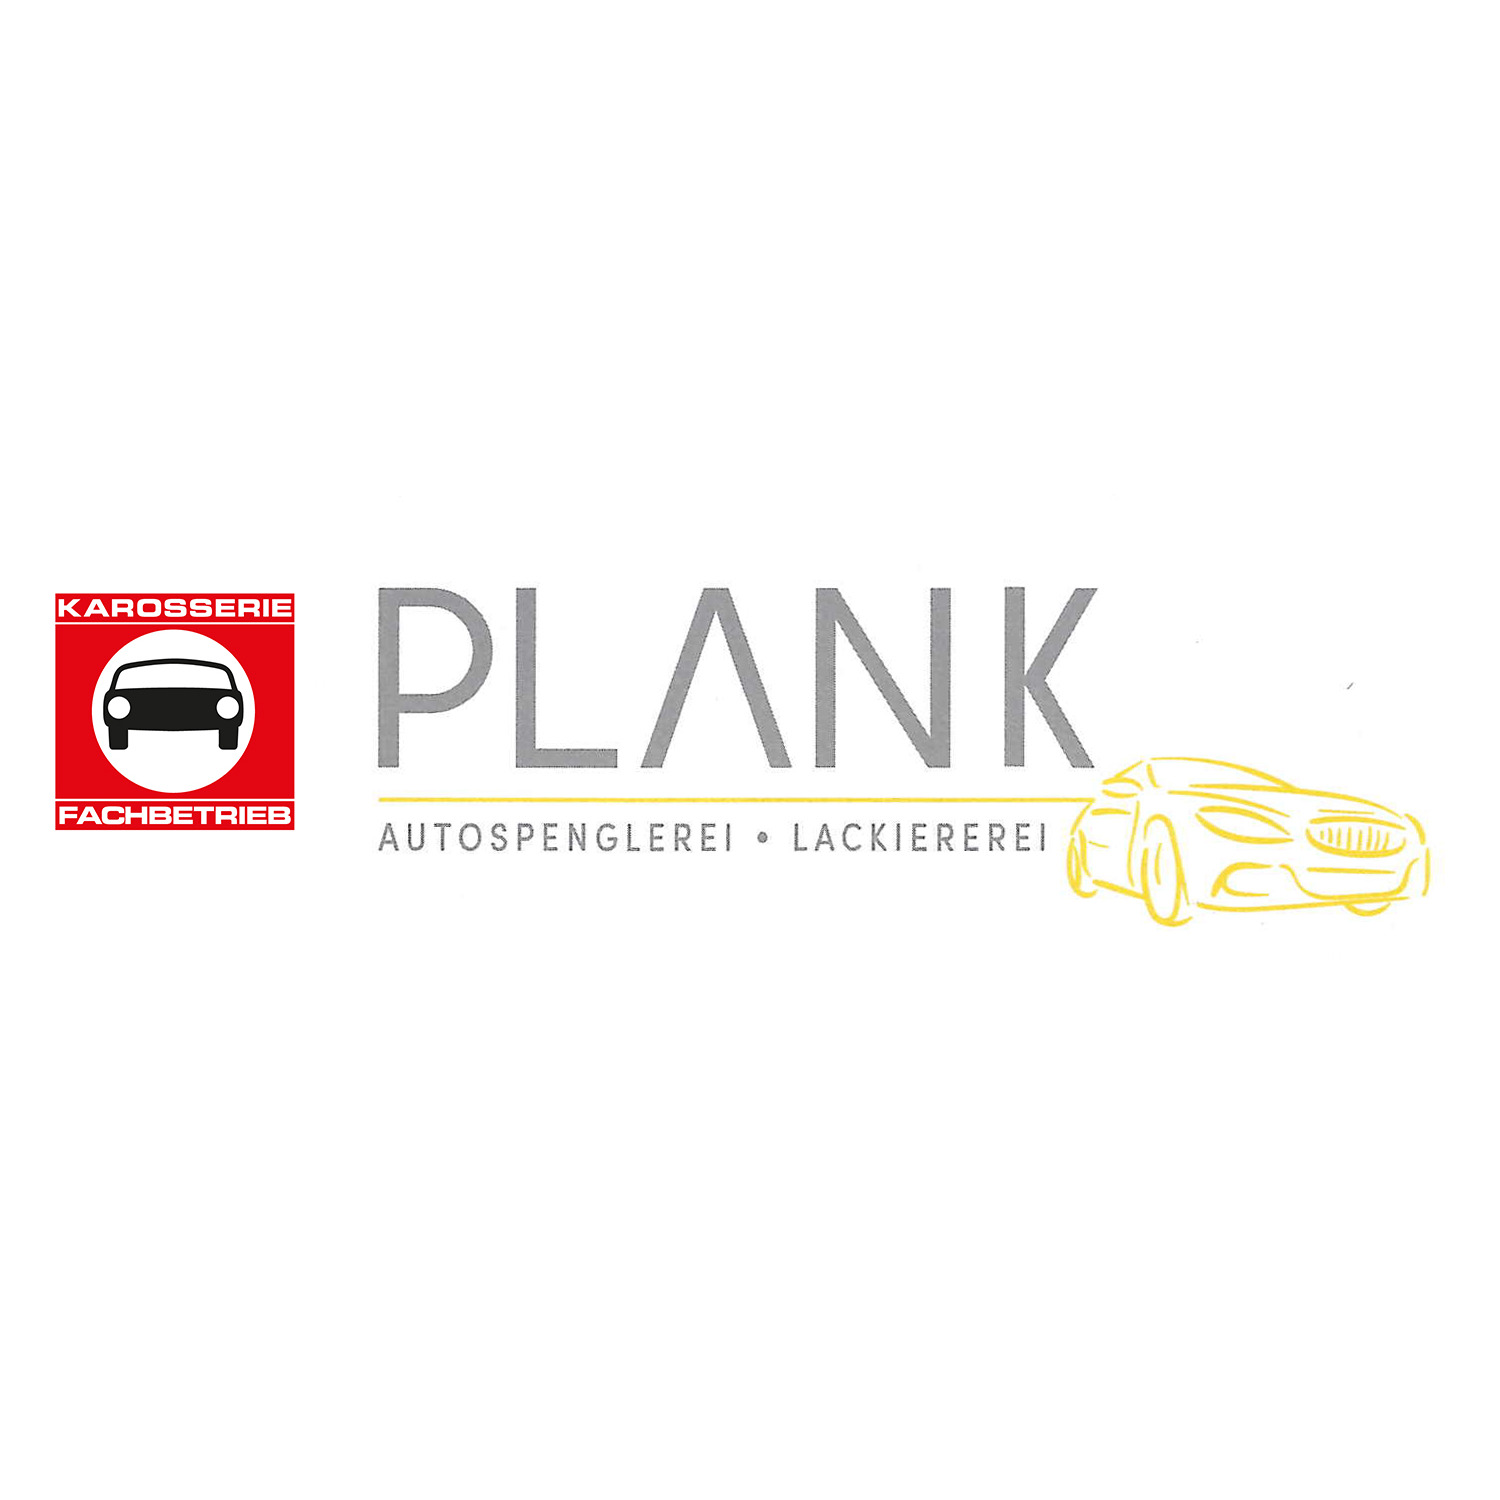 Hannes Plank Autospenglerei und Lackierei in Thaur Logo